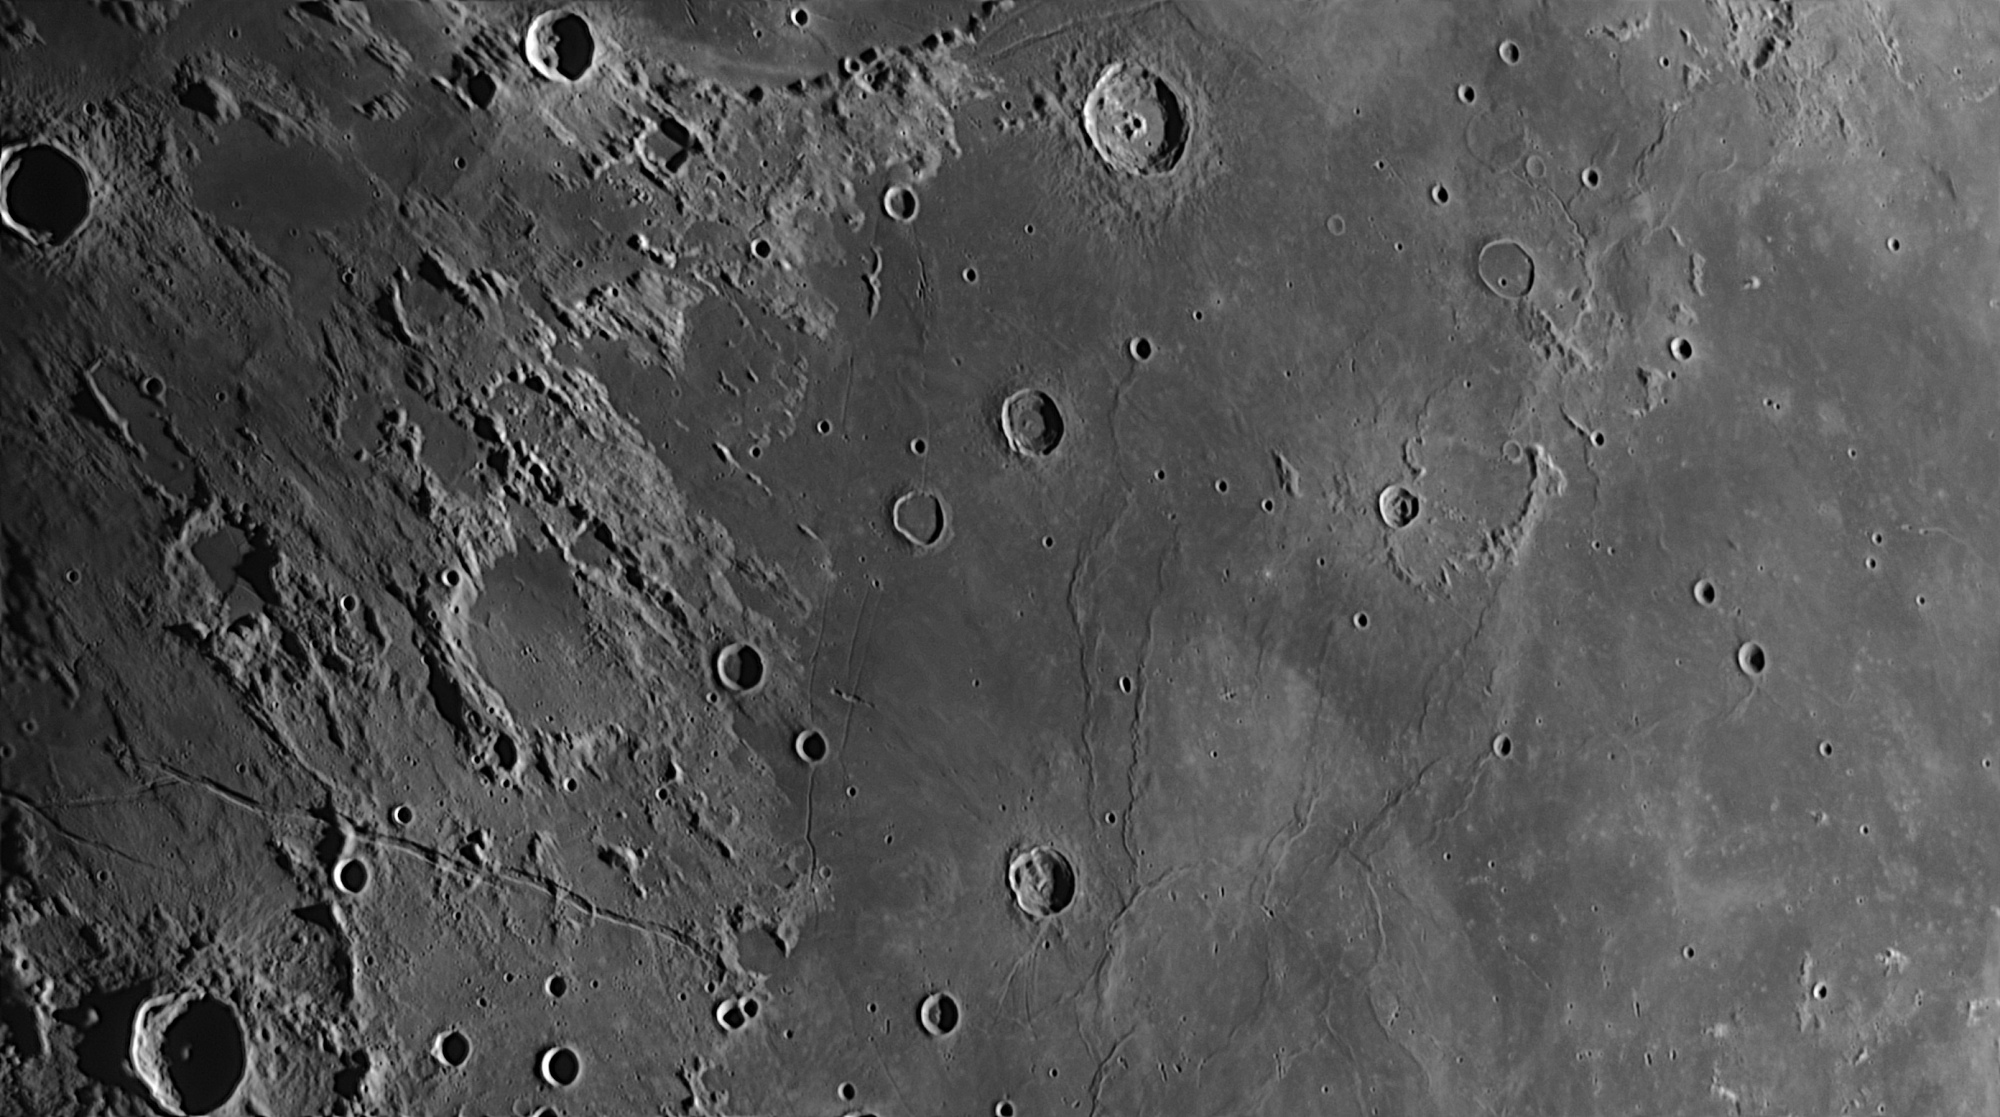 Lune4.jpg